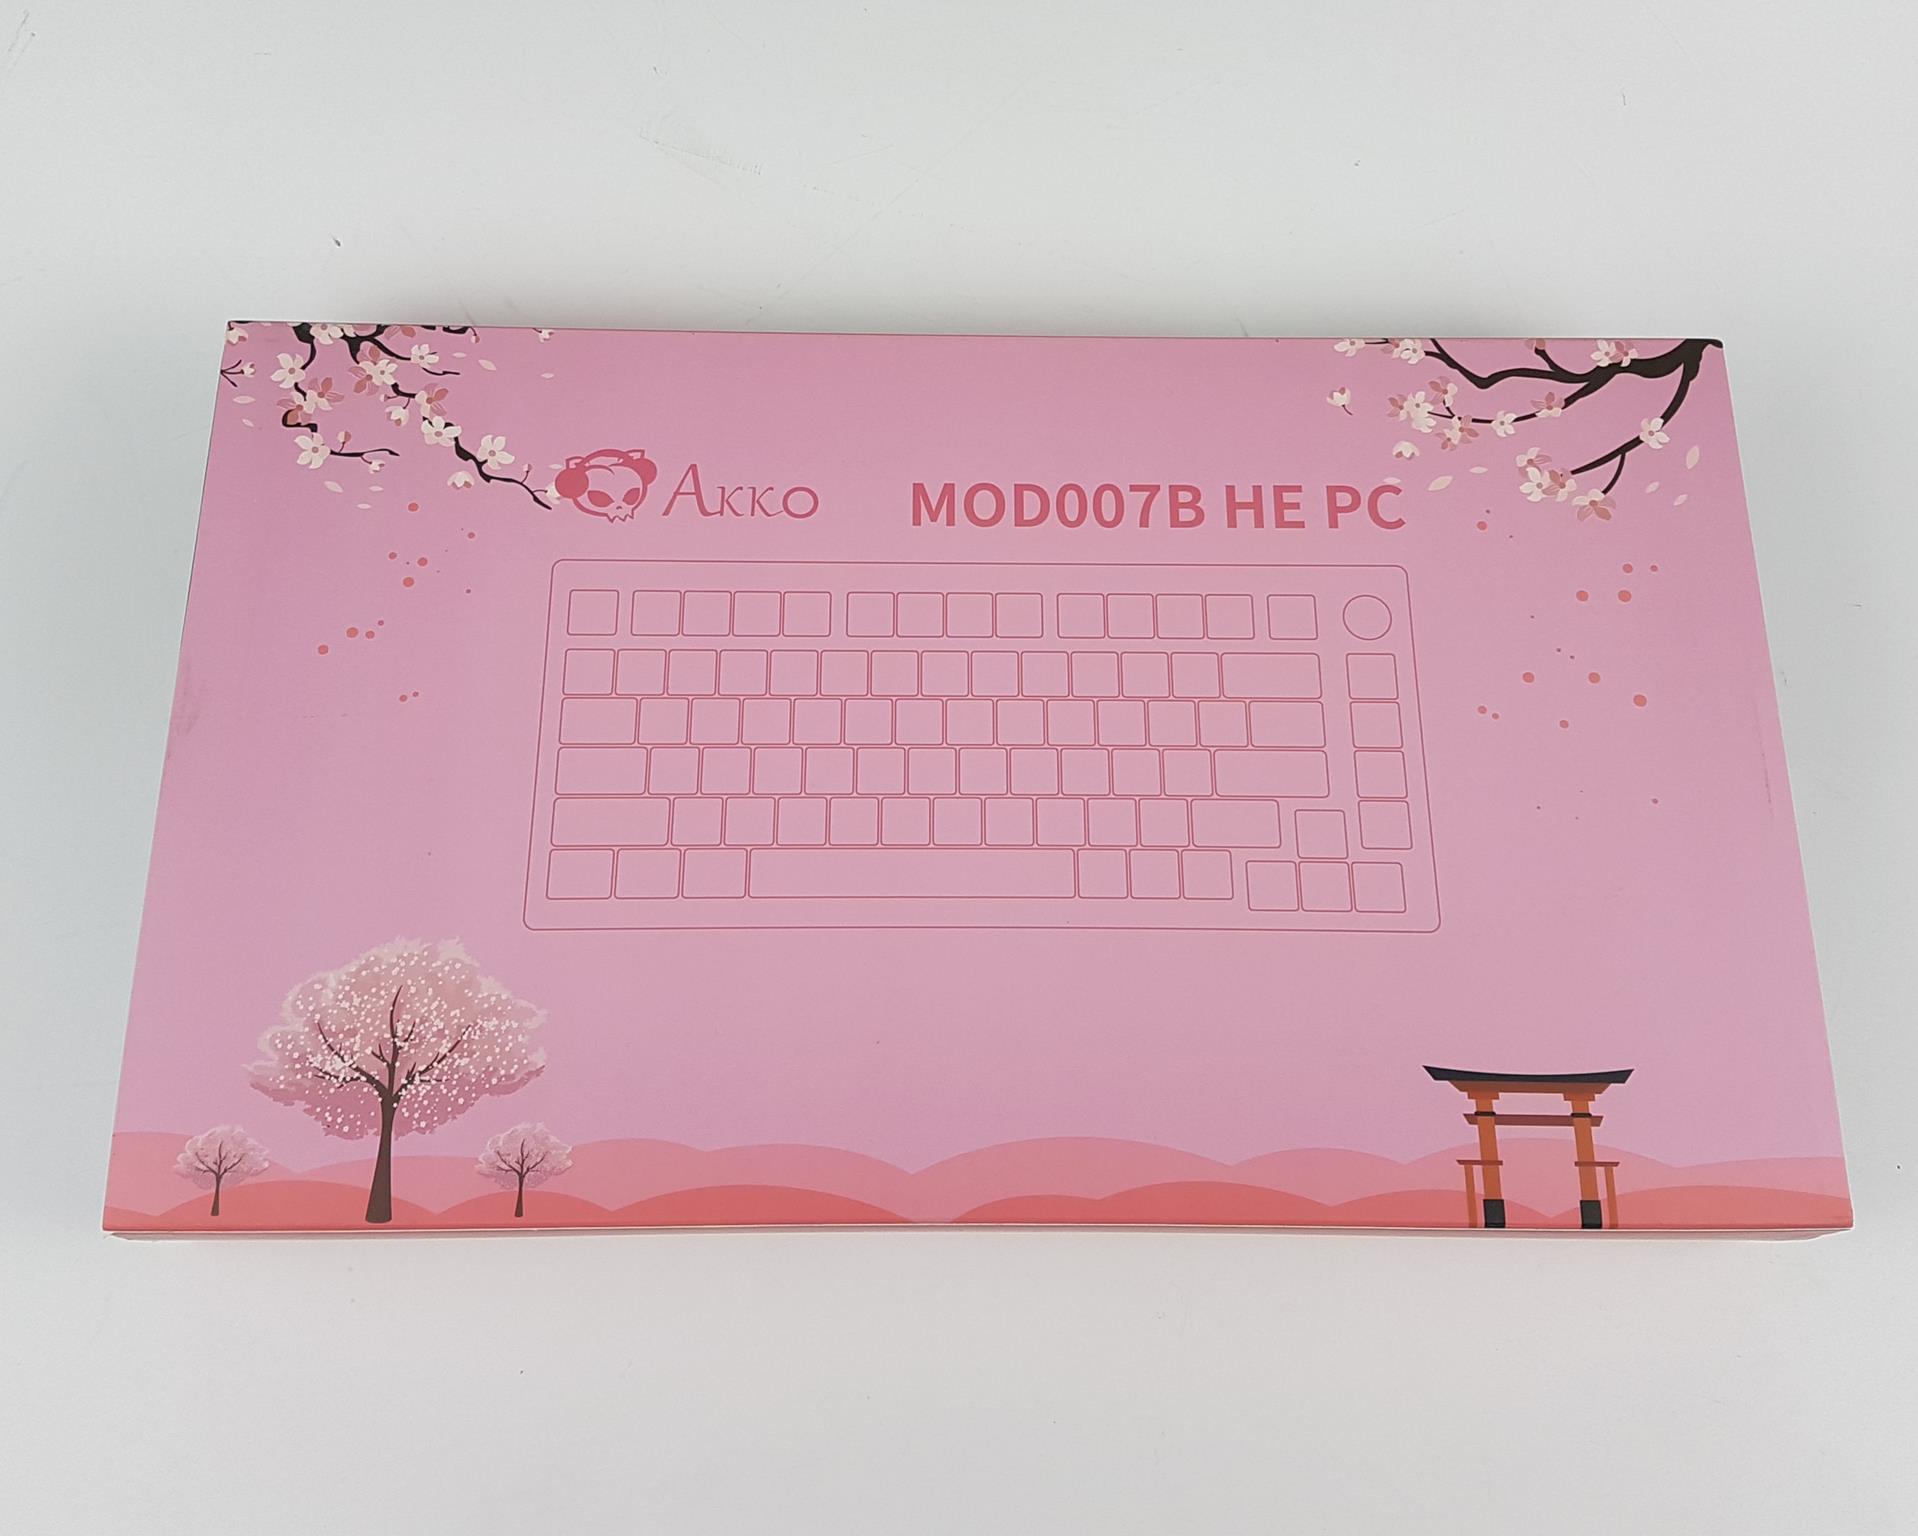 AKKO MOD007B PC HE Tokyo Packing Box 1